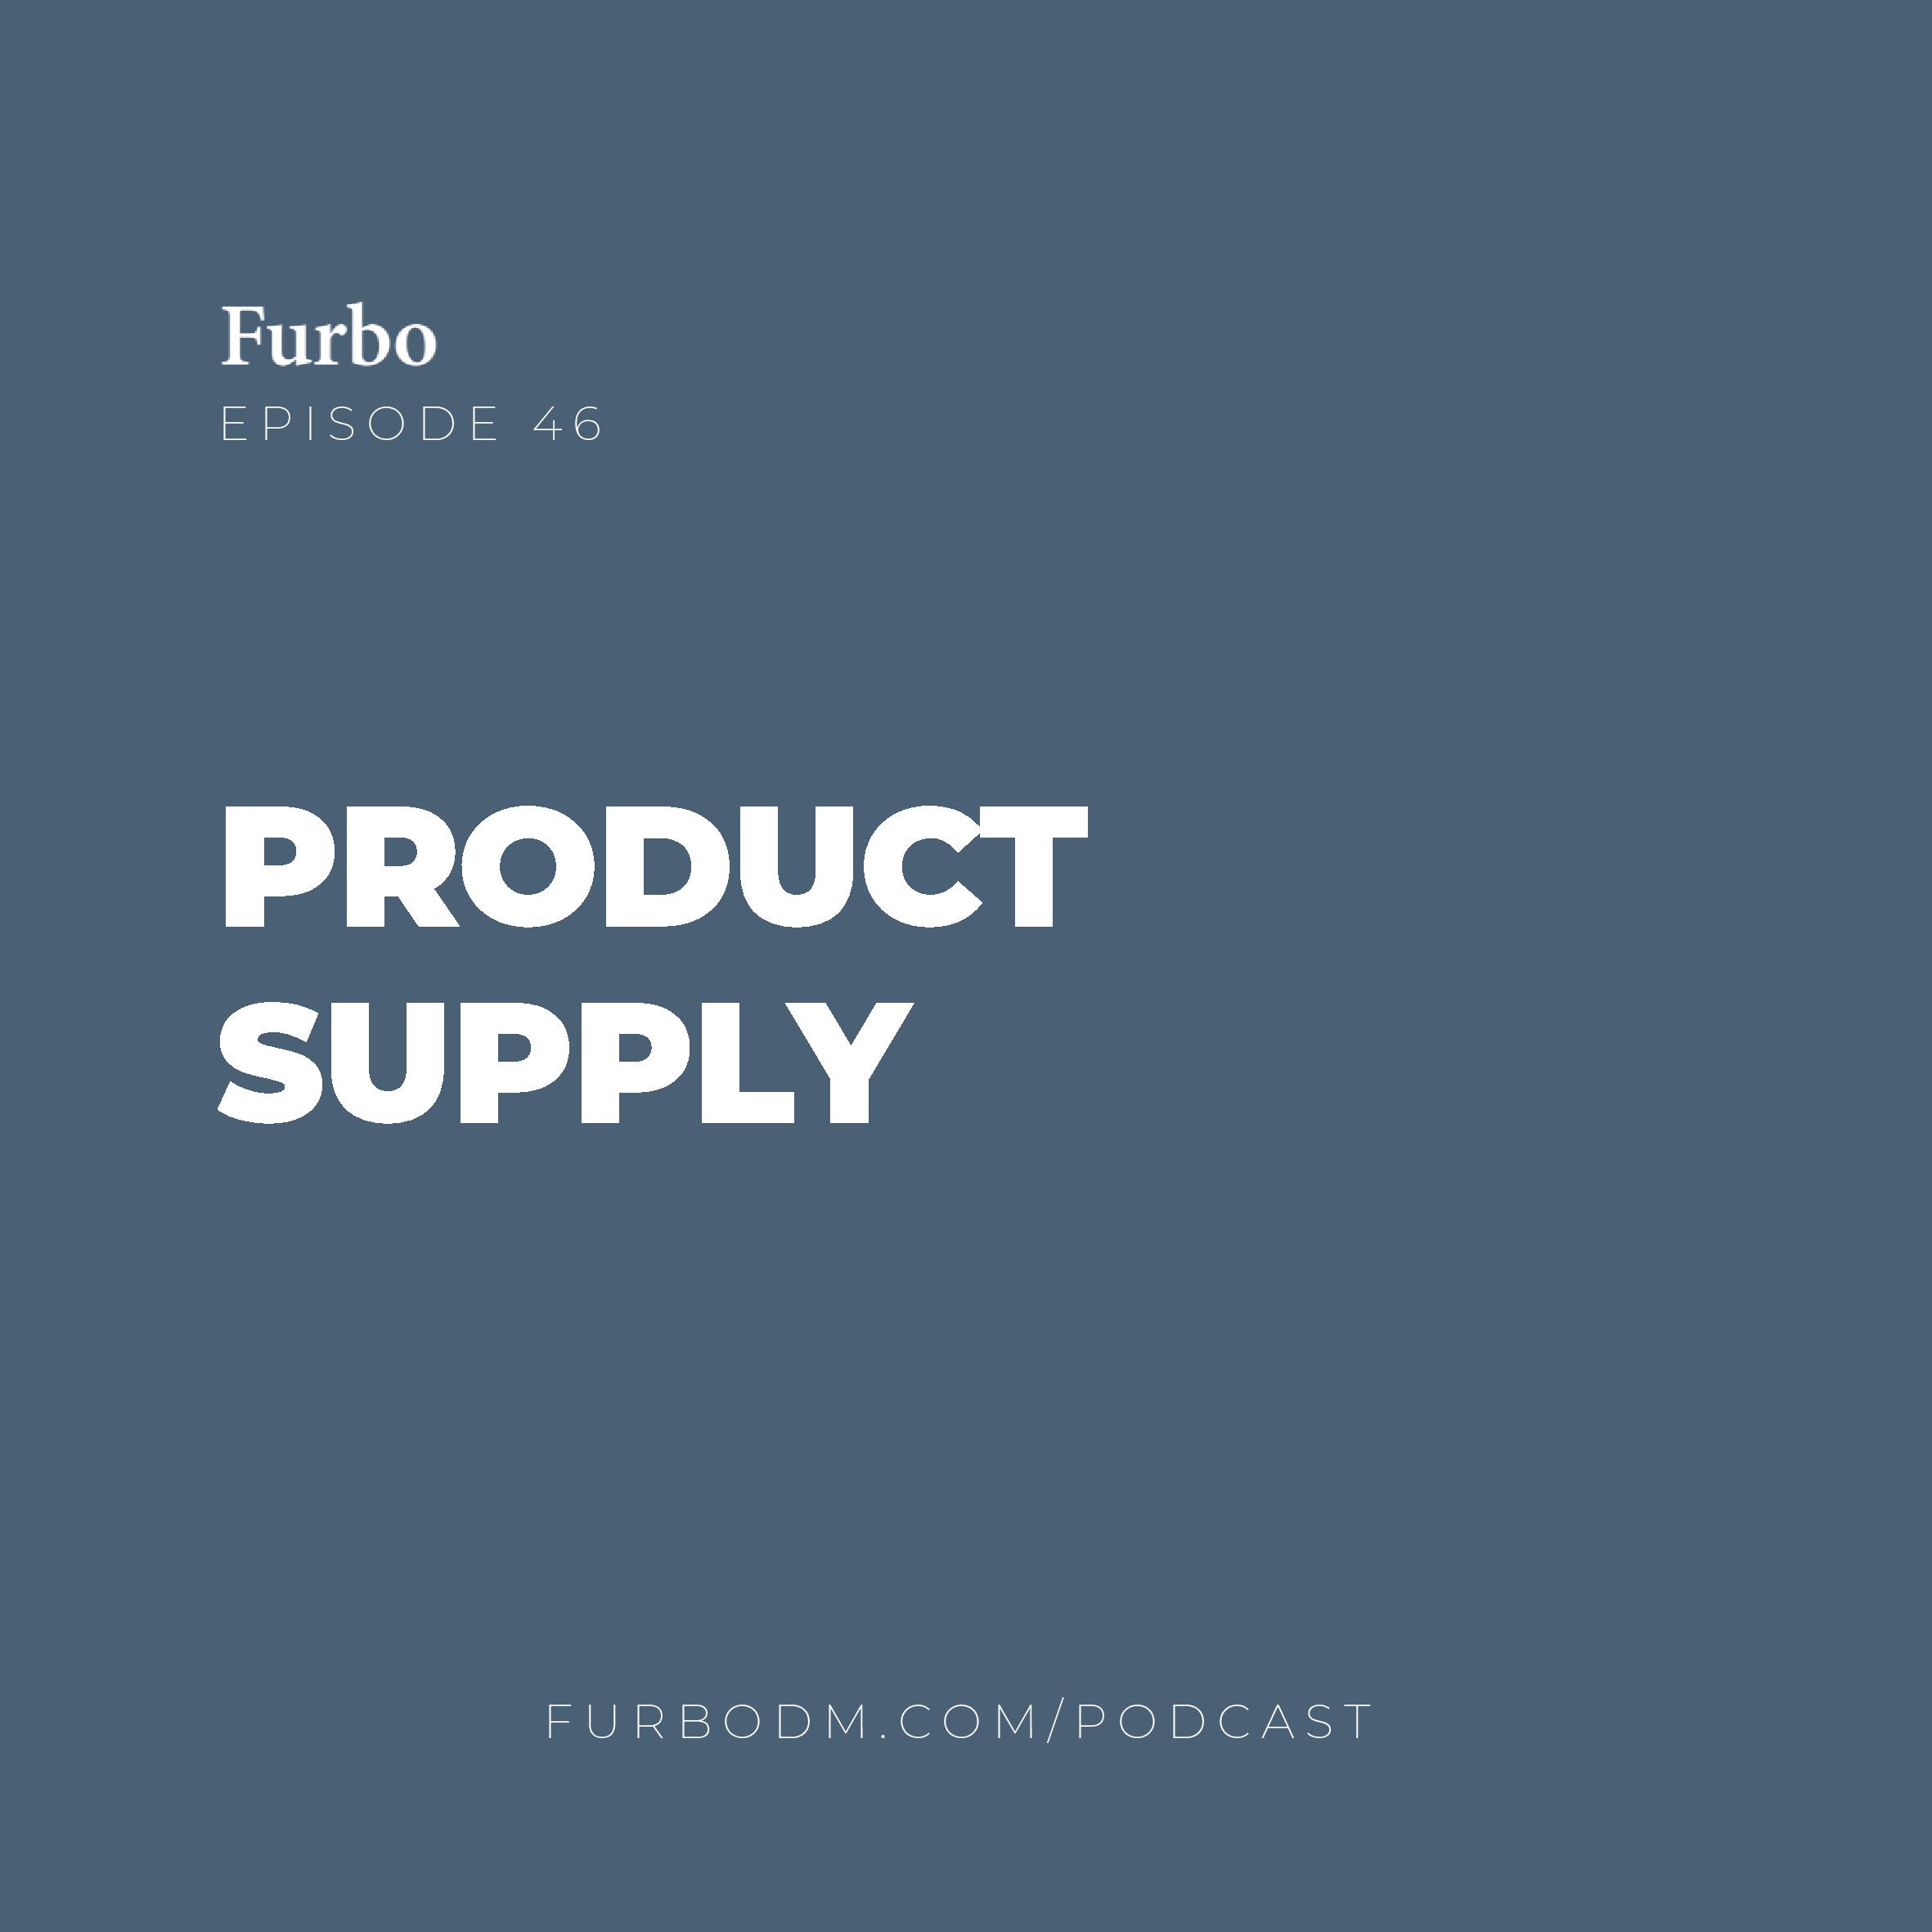 E46: Product Supply | چطور کالا و محصول فروشگاه اینترنتی را تامین کنیم؟